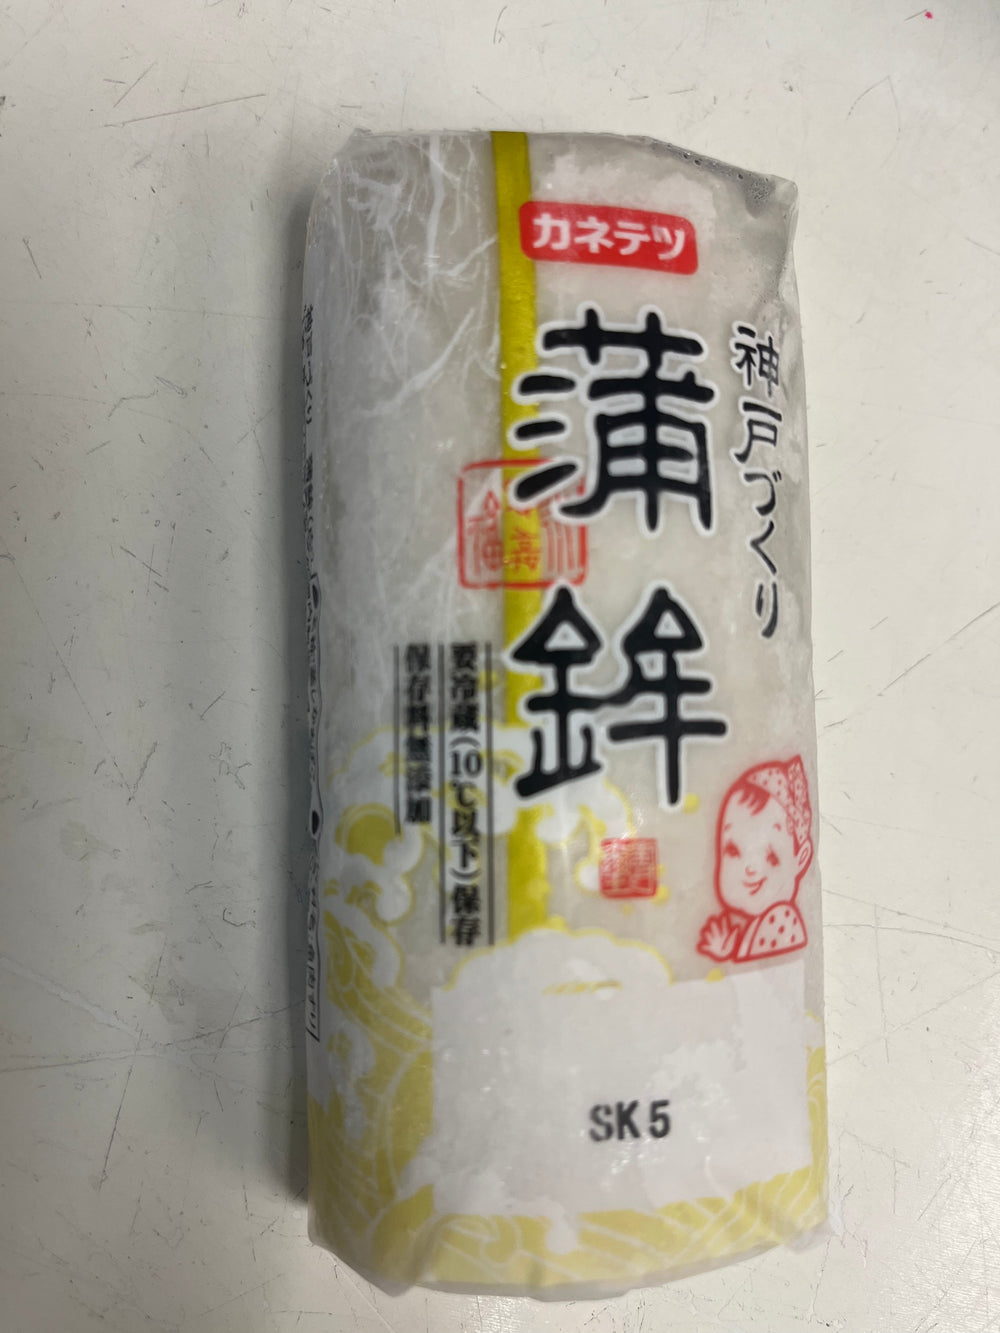 Kanetetsu White Kamaboko (Steamed Fish Cake) / カネテツ 蒲鉾 白 90g - Konbiniya Japan Centre